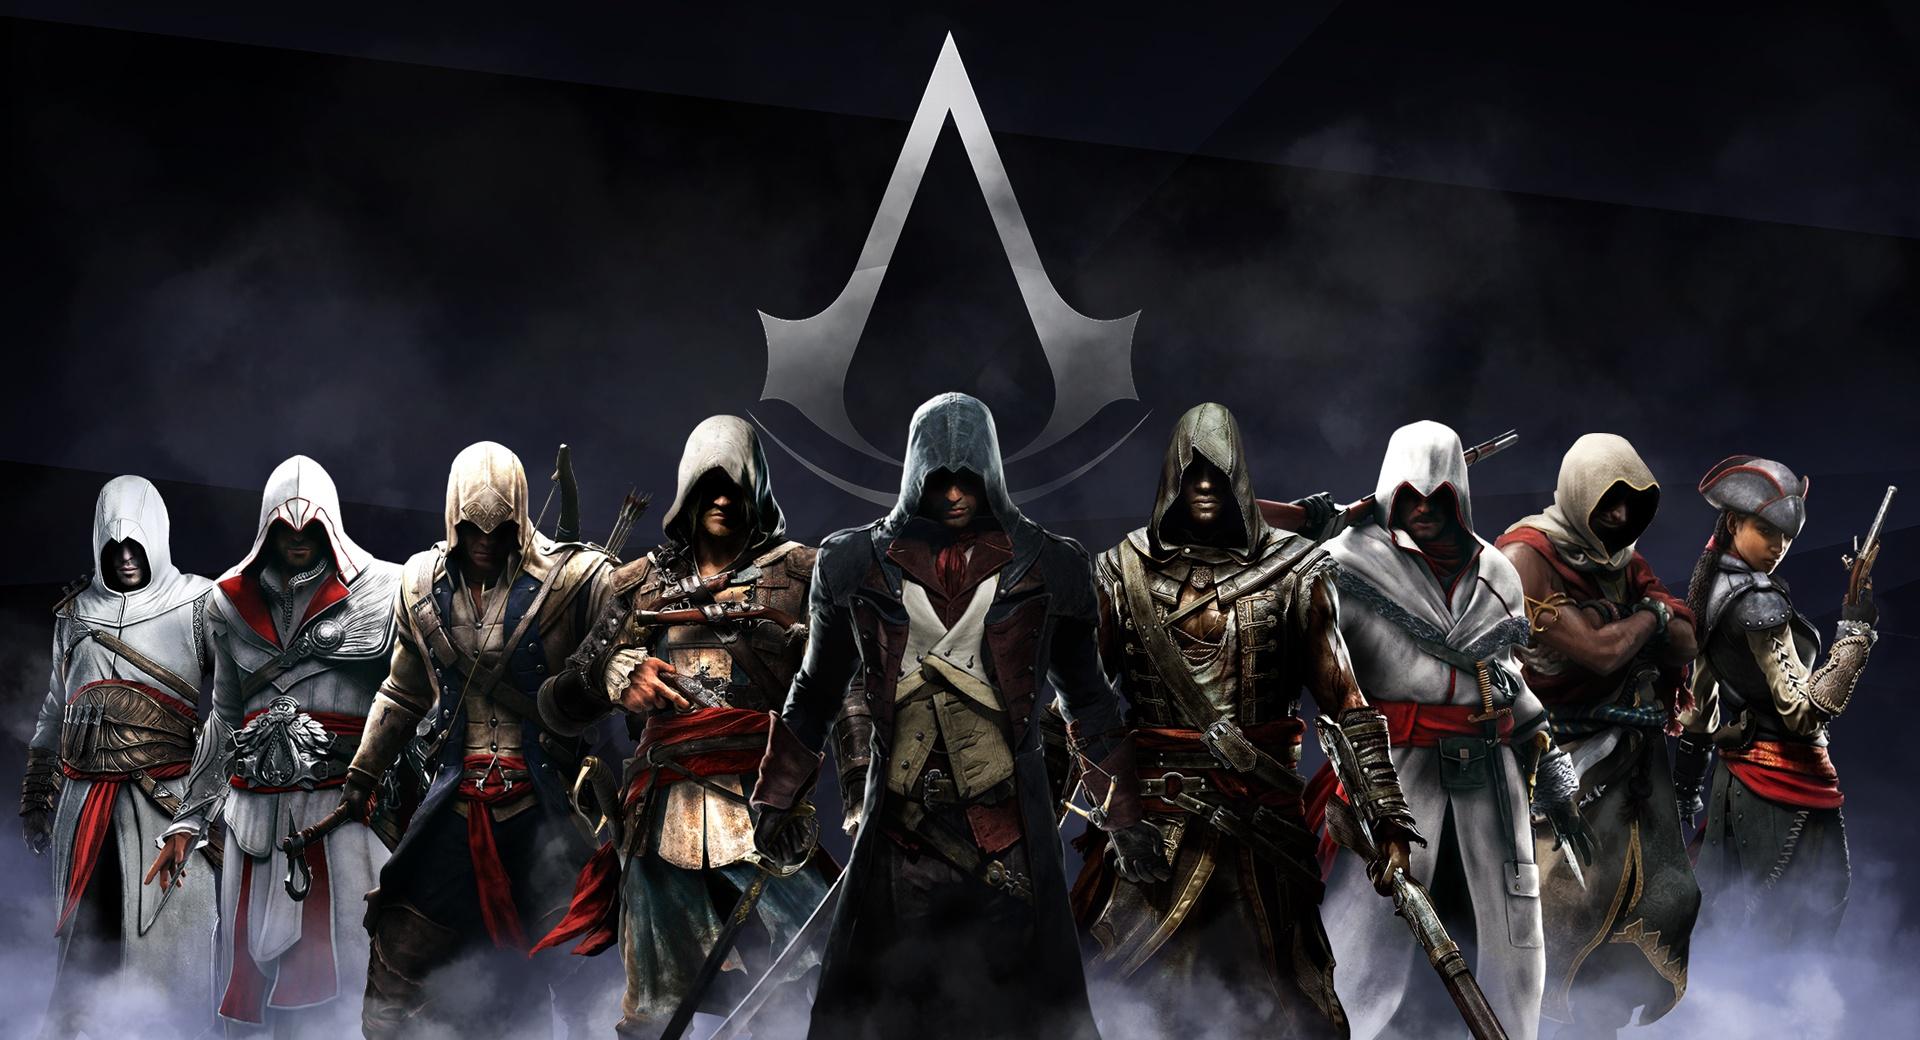 Assassins Creed Artwork Full HD at 1024 x 1024 iPad size wallpapers HD quality